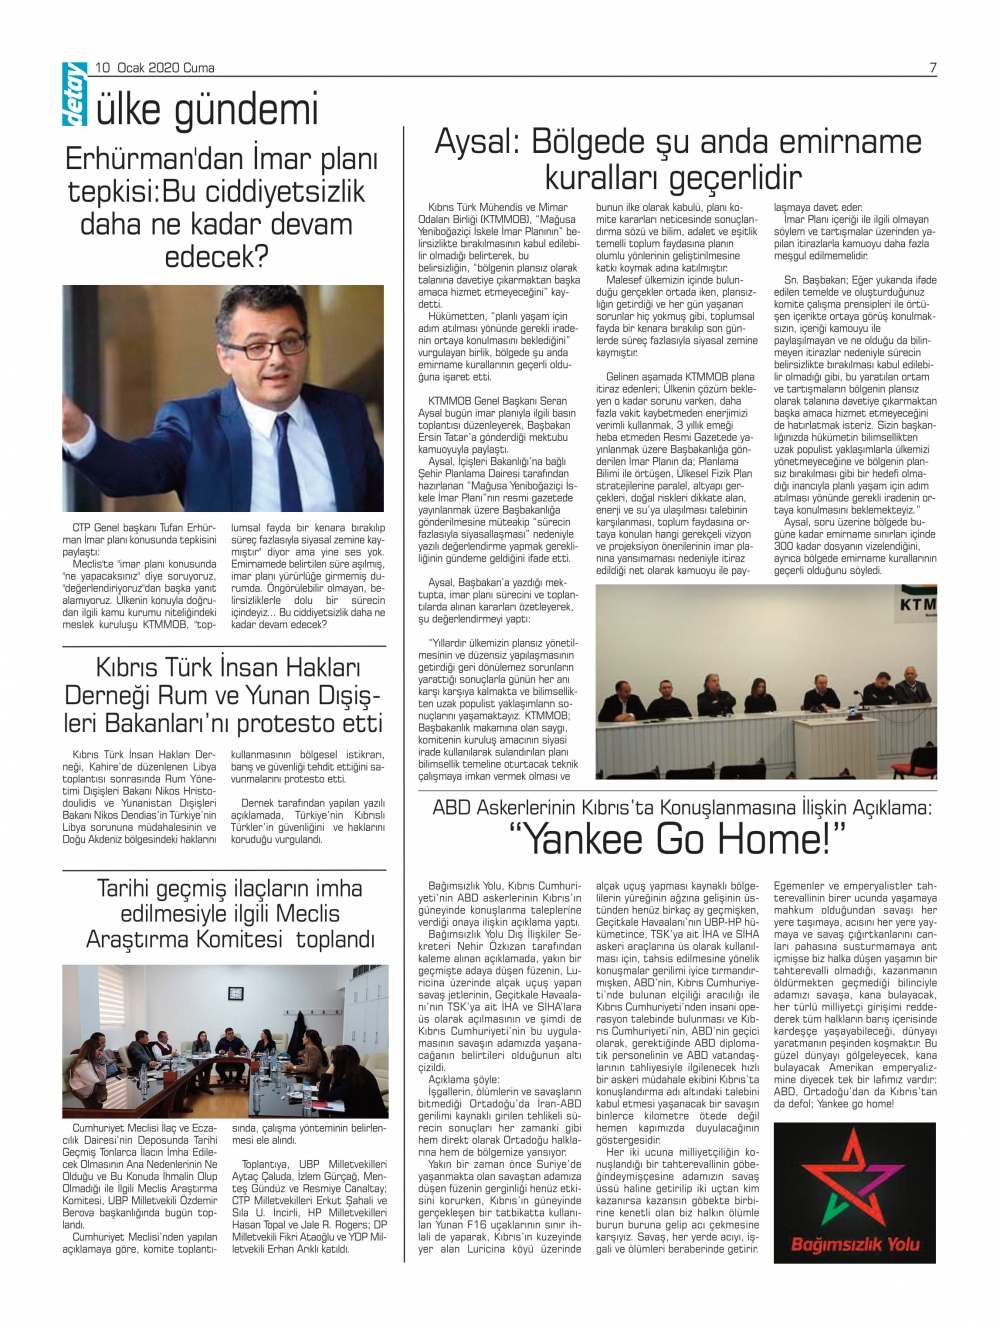 Detay Gazetes 10 Ocak 2020 galerisi resim 7